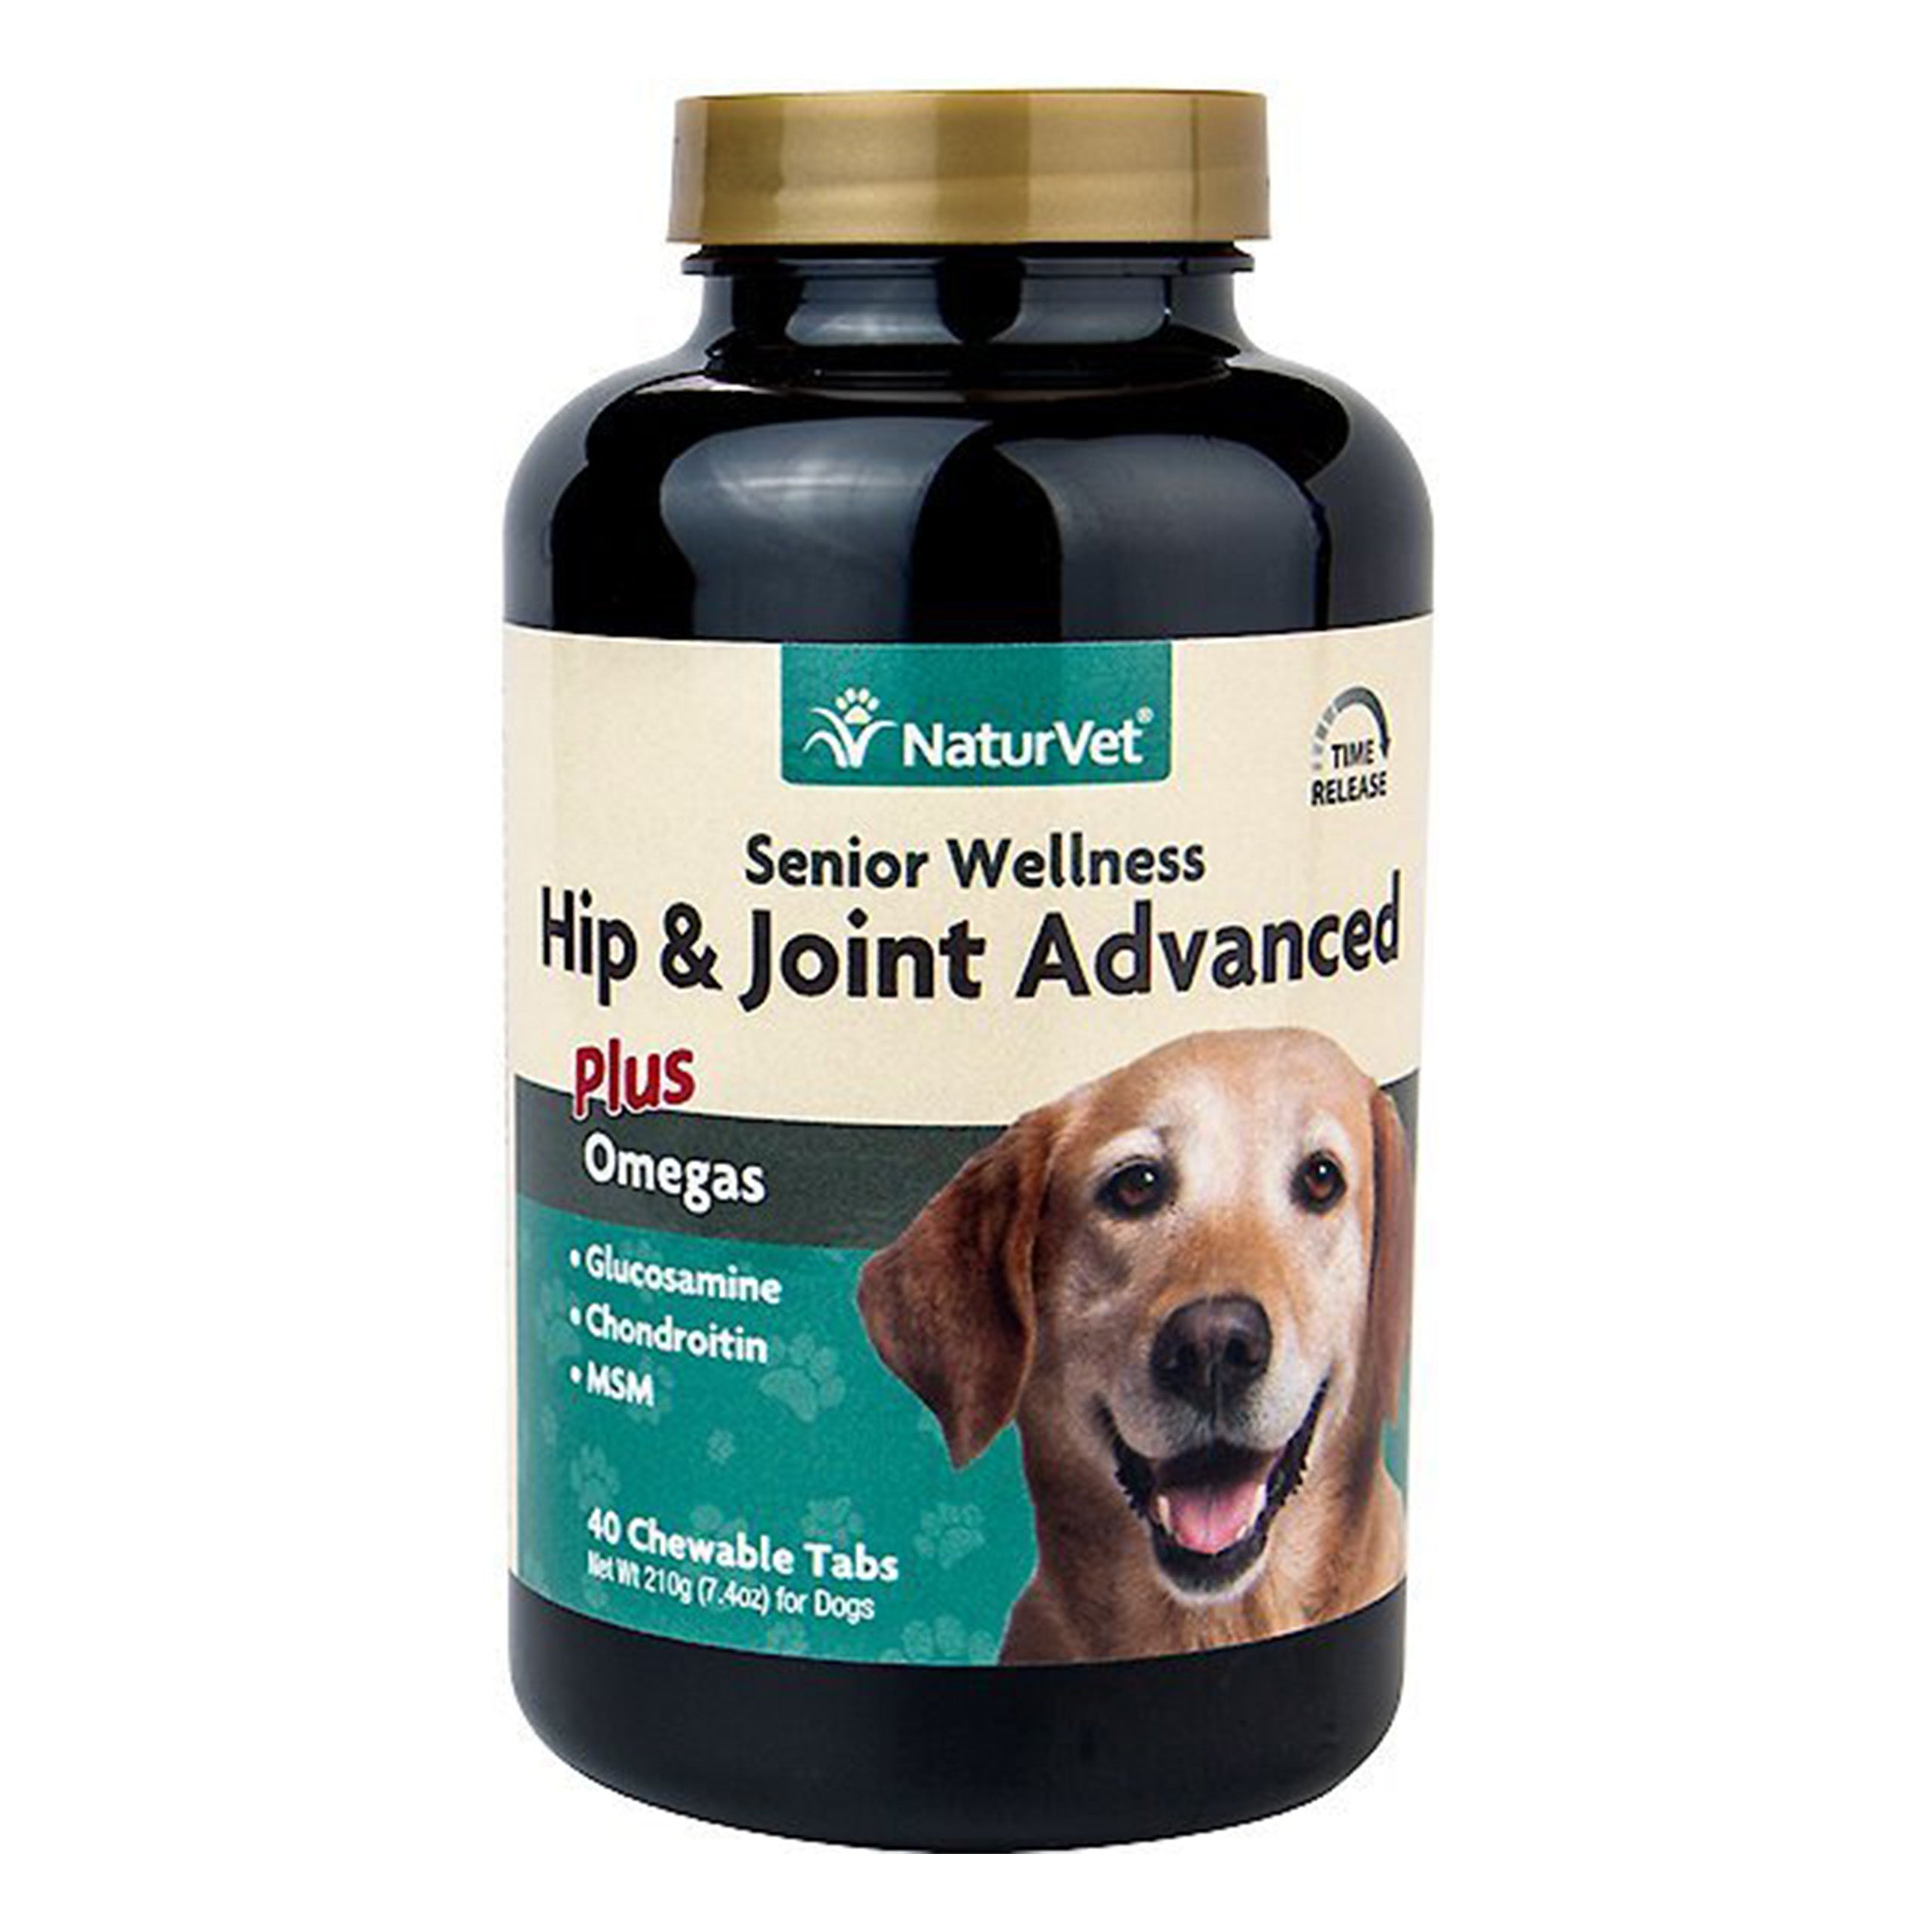 NaturVet Senior Wellness Hip & Joint Advanced Glucosamine, Chondroitin & MSM Plus Omegas Dog Supplement